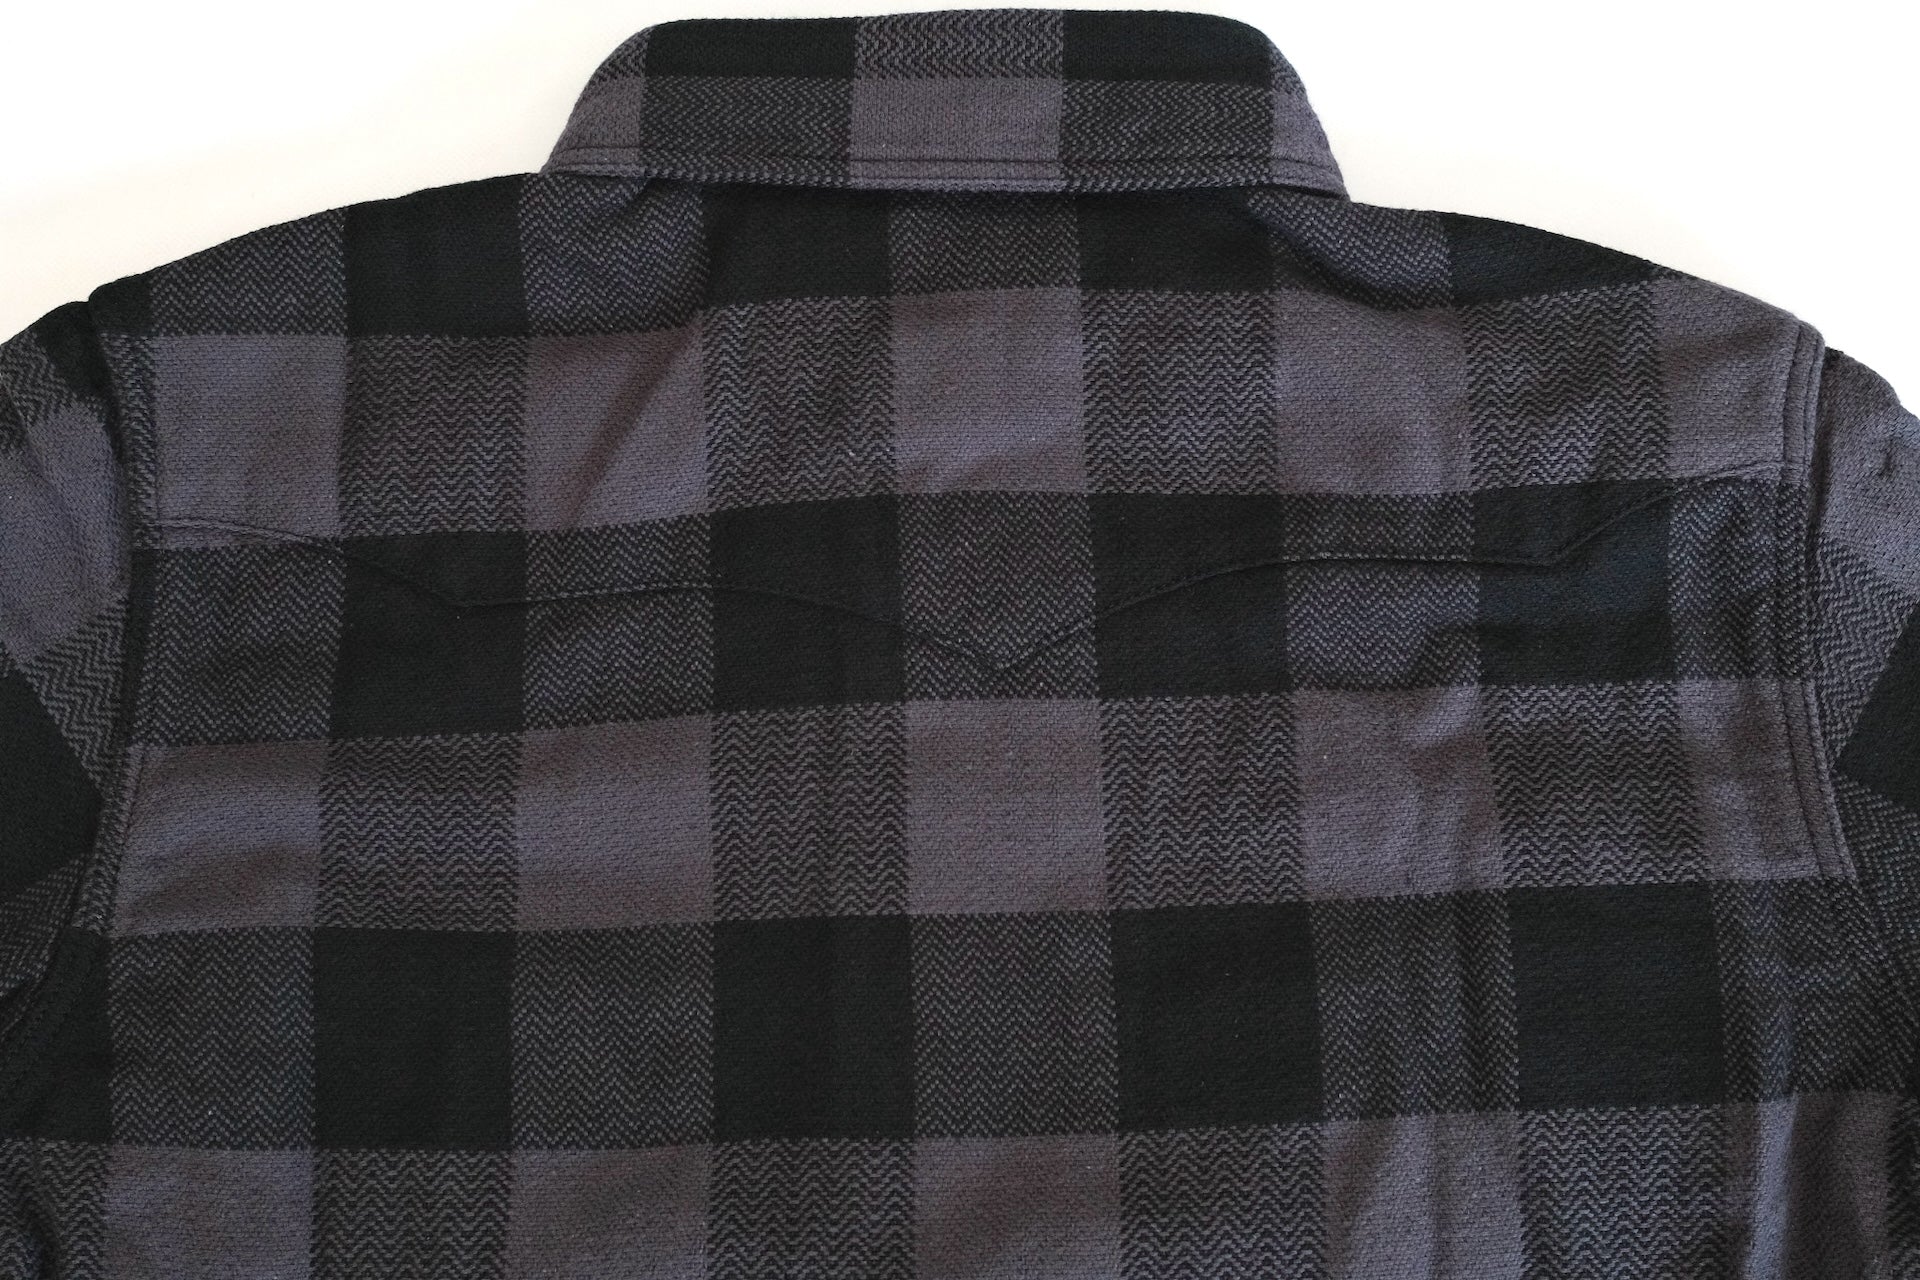 The Flat Head 12oz Selvage Flannel Western Shirt (Black X Grey)